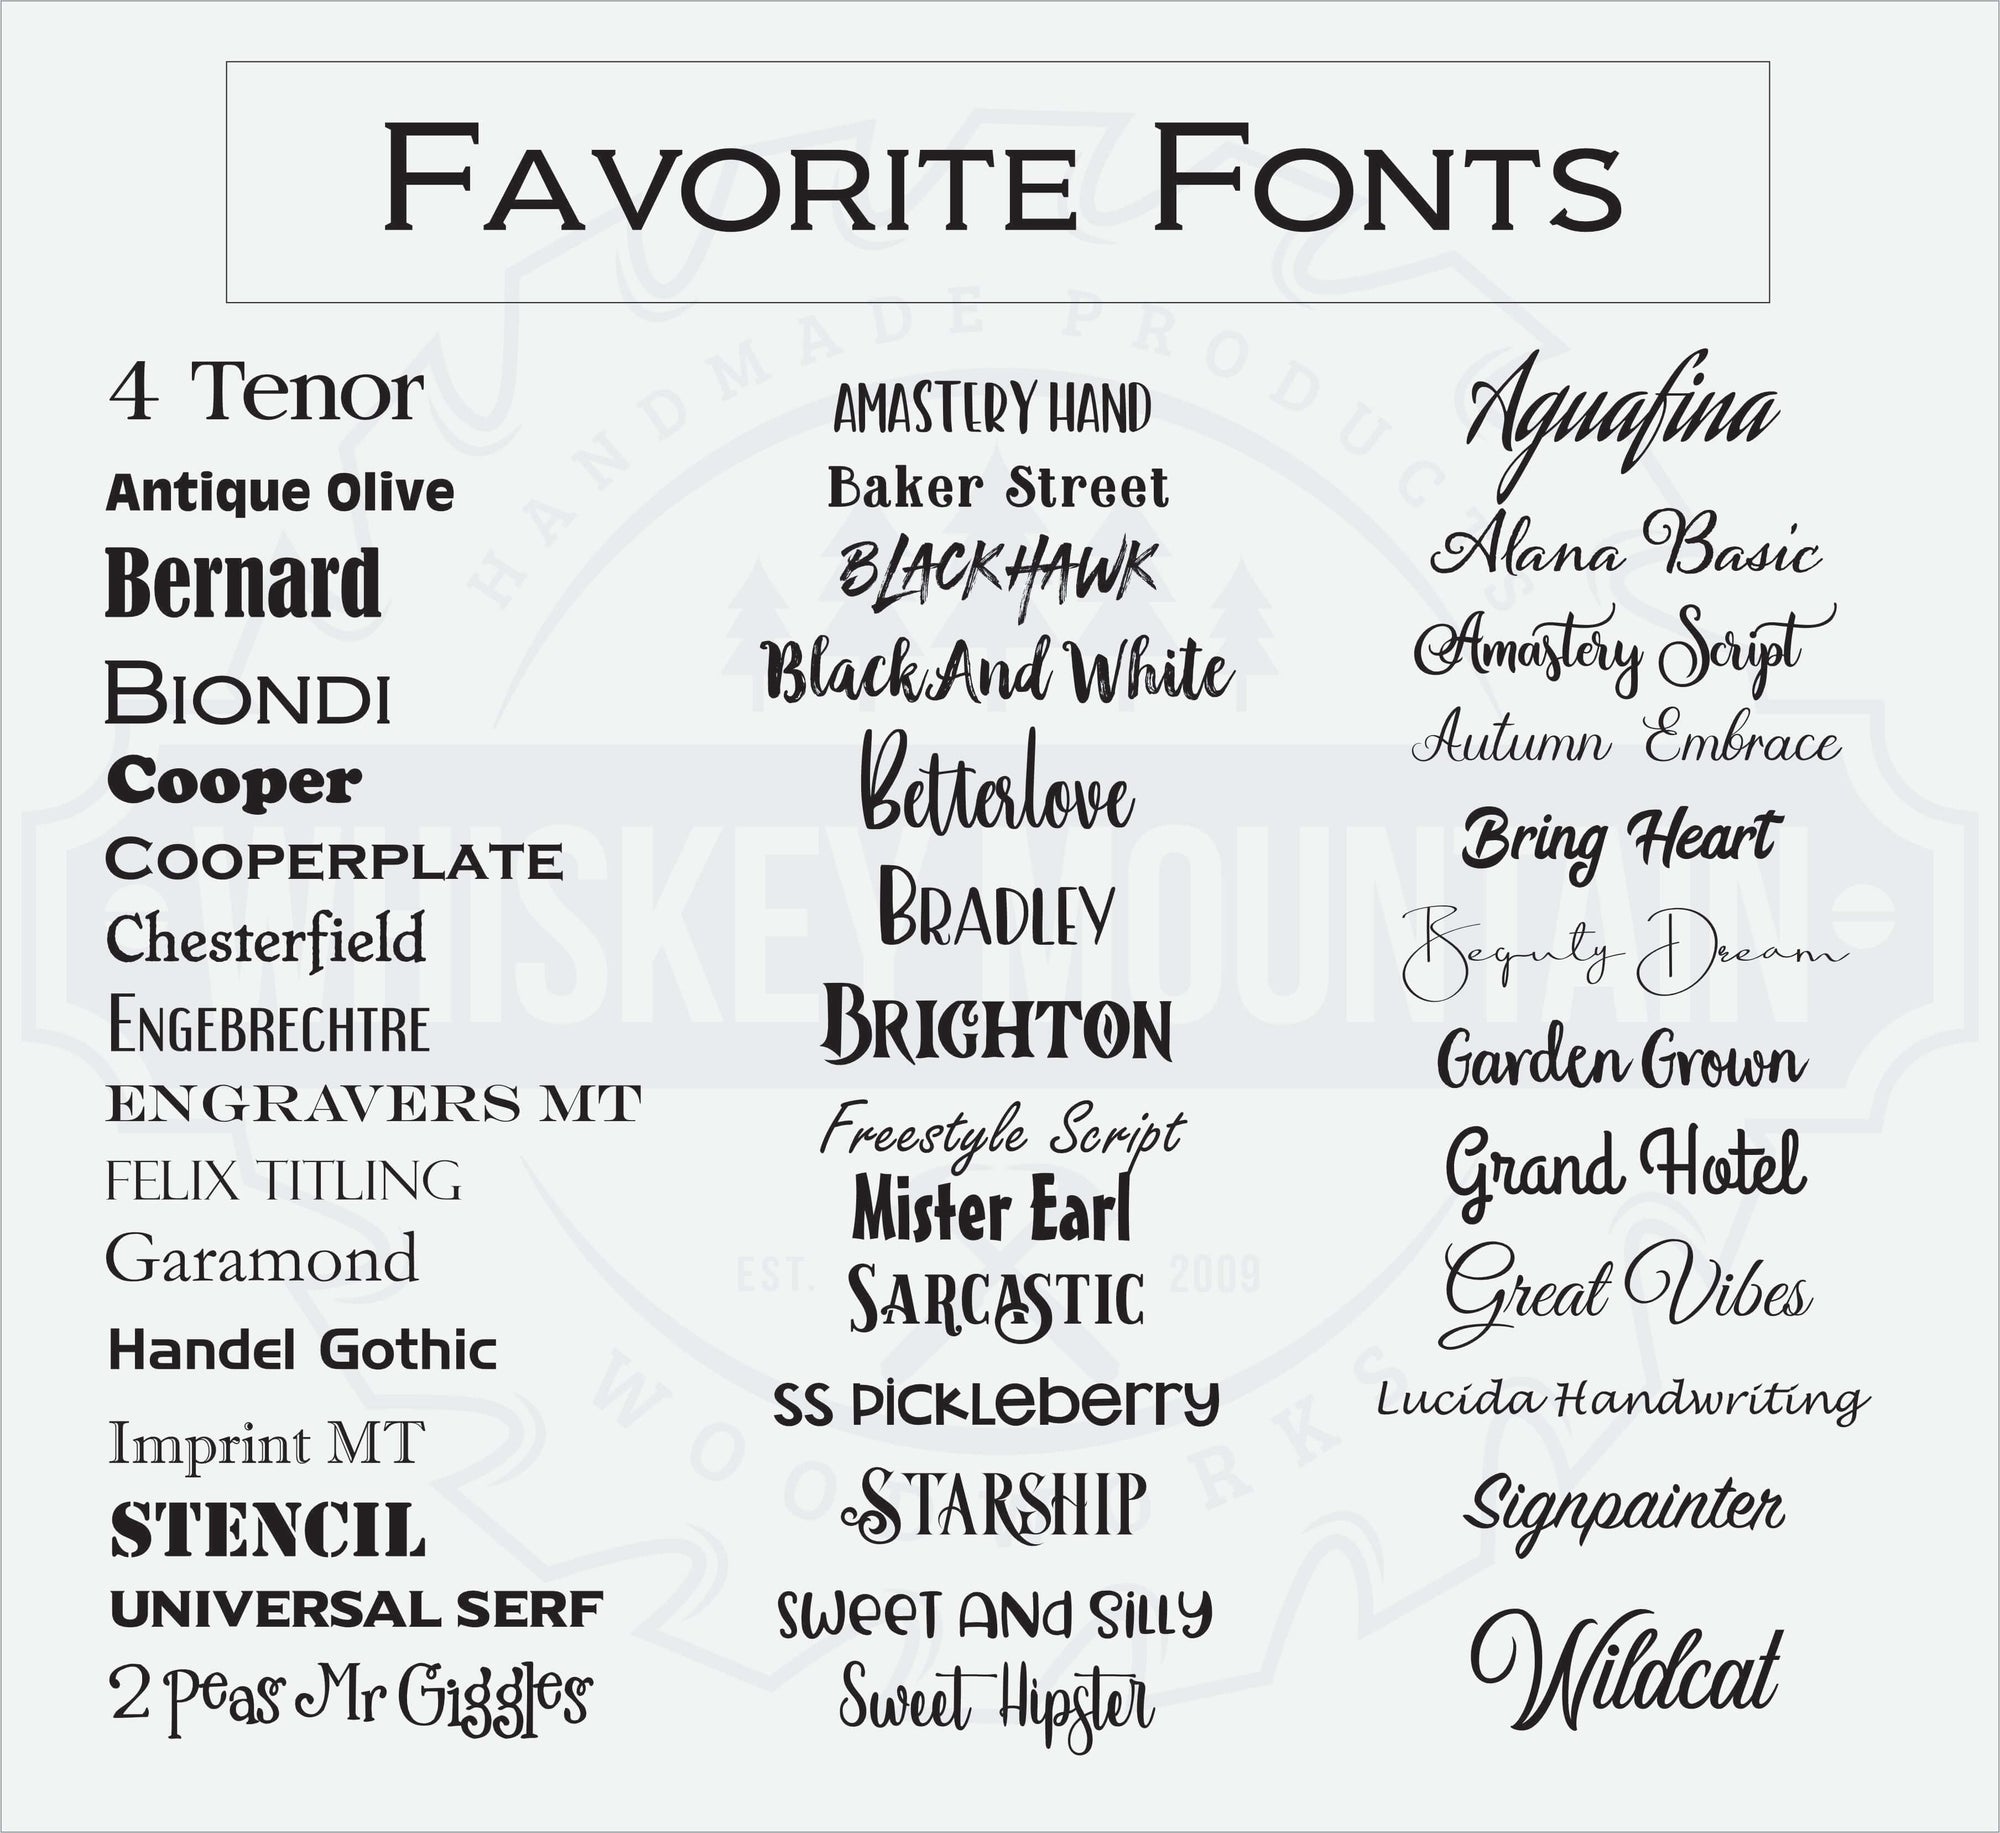 Photo showcasing customer favorite fonts for custom personalization options